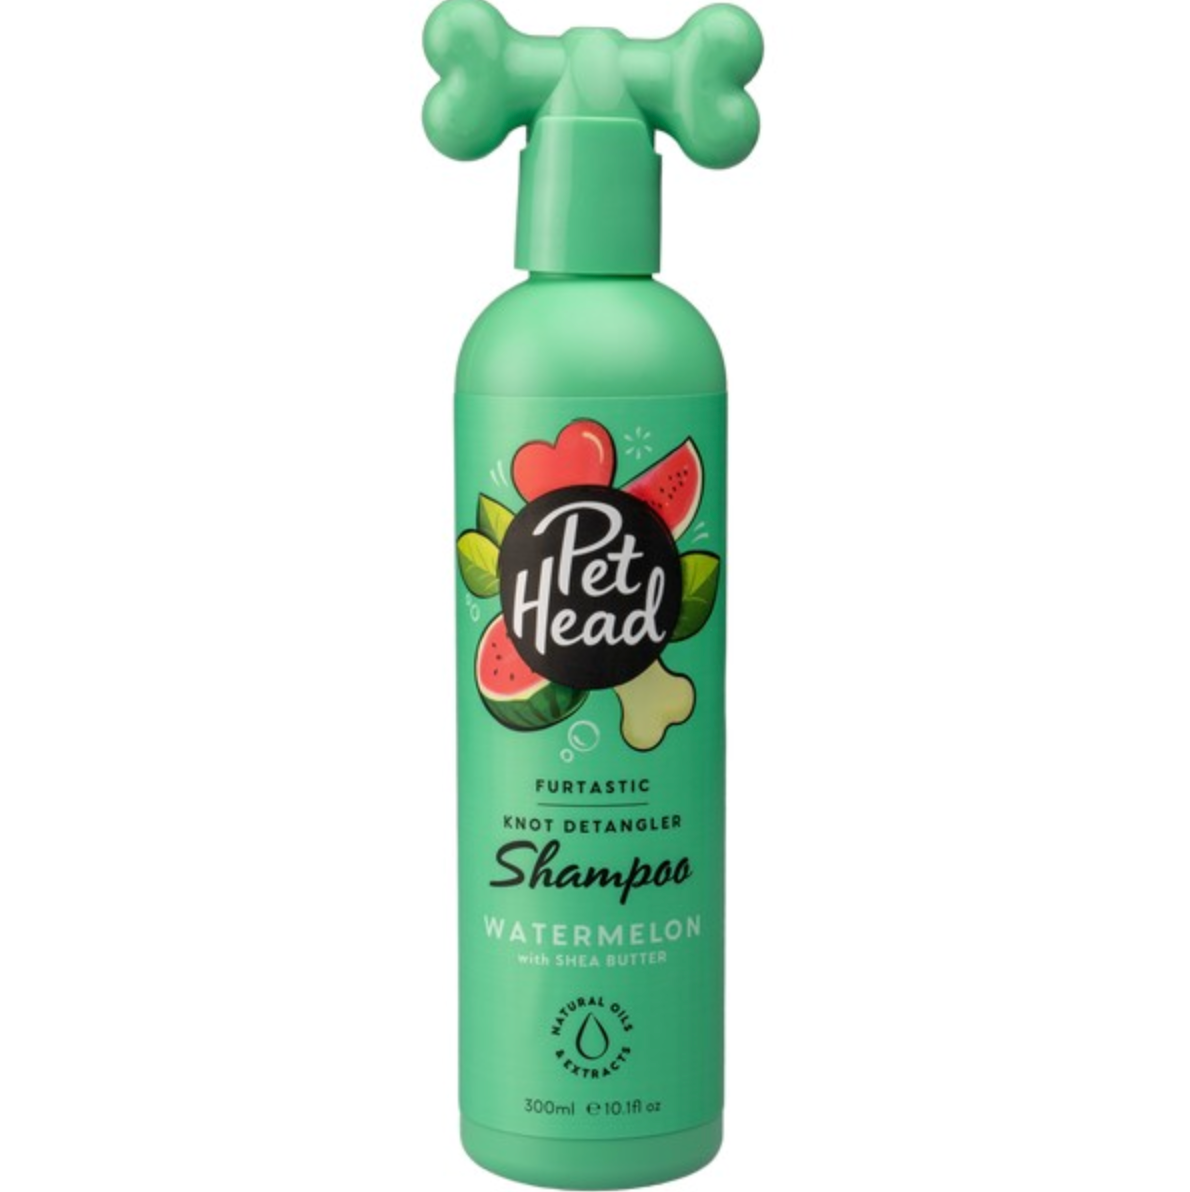 Pet Head Furtastic Knot Detangler Shampoo Watermelon (250ml)